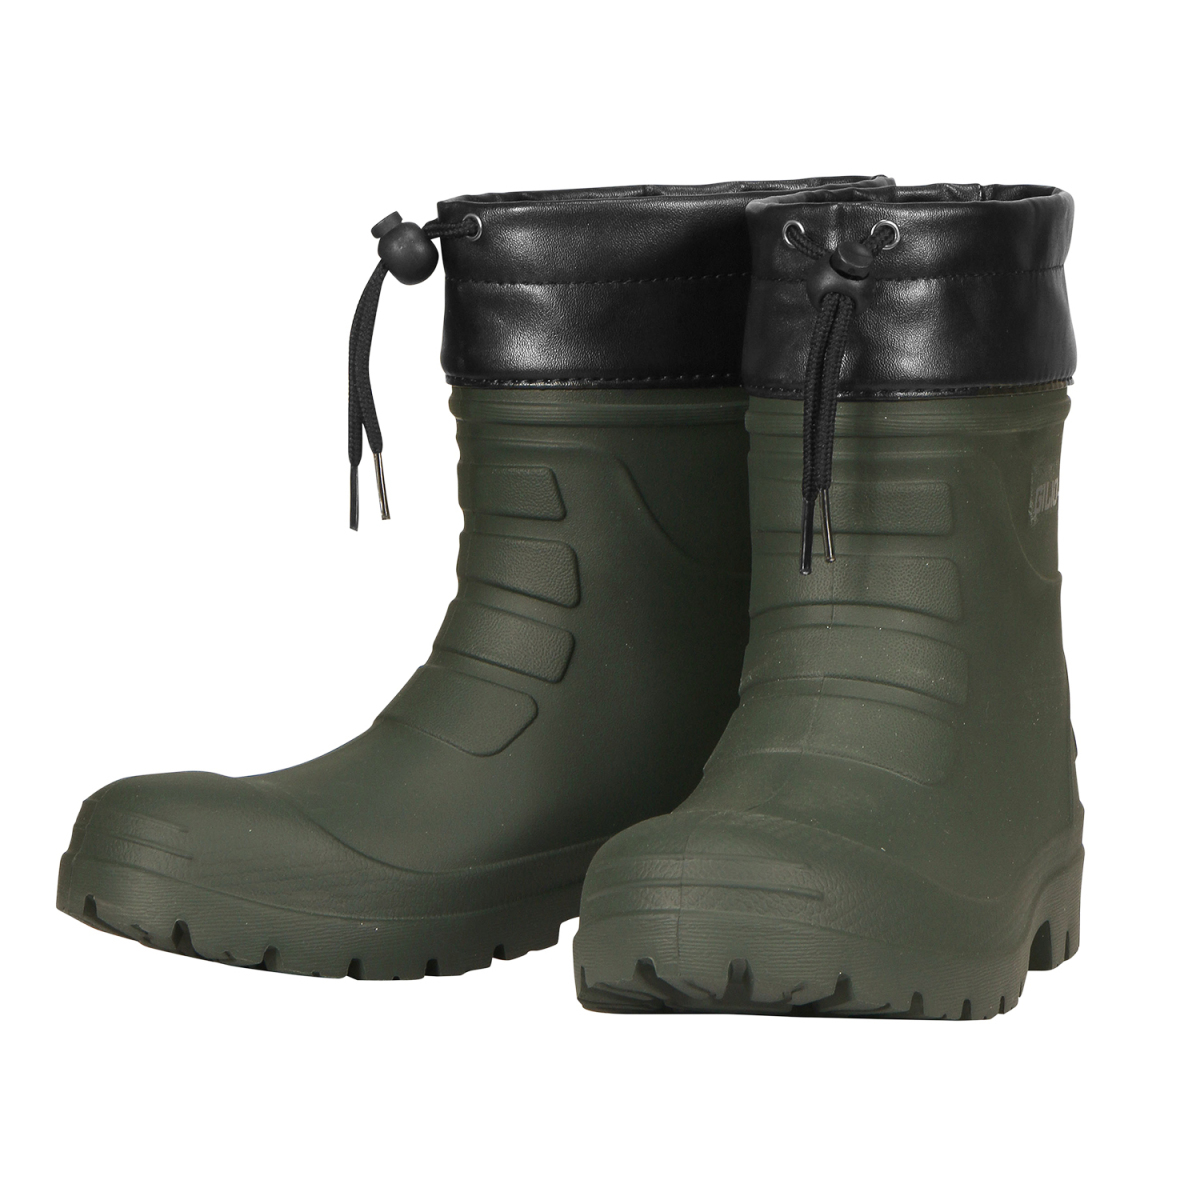 * D green * LL(26.5-27.0) boots men's work for outdoor stylish rain boots kaji make-up short boots snow boots sho